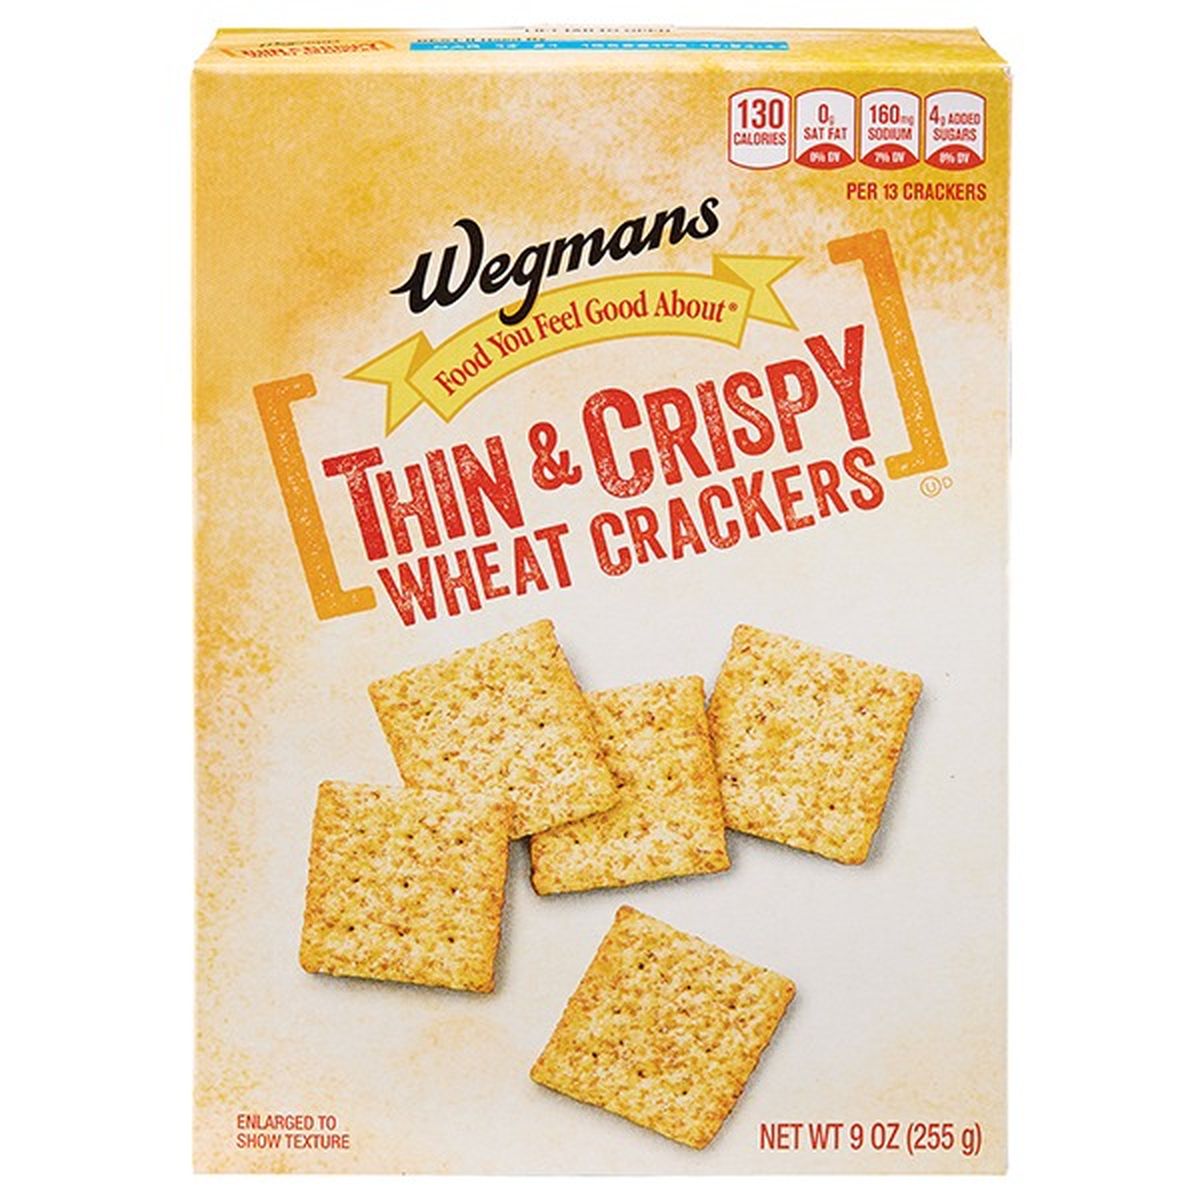 Calories in Wegmans Thin & Crispy Wheat Crackers